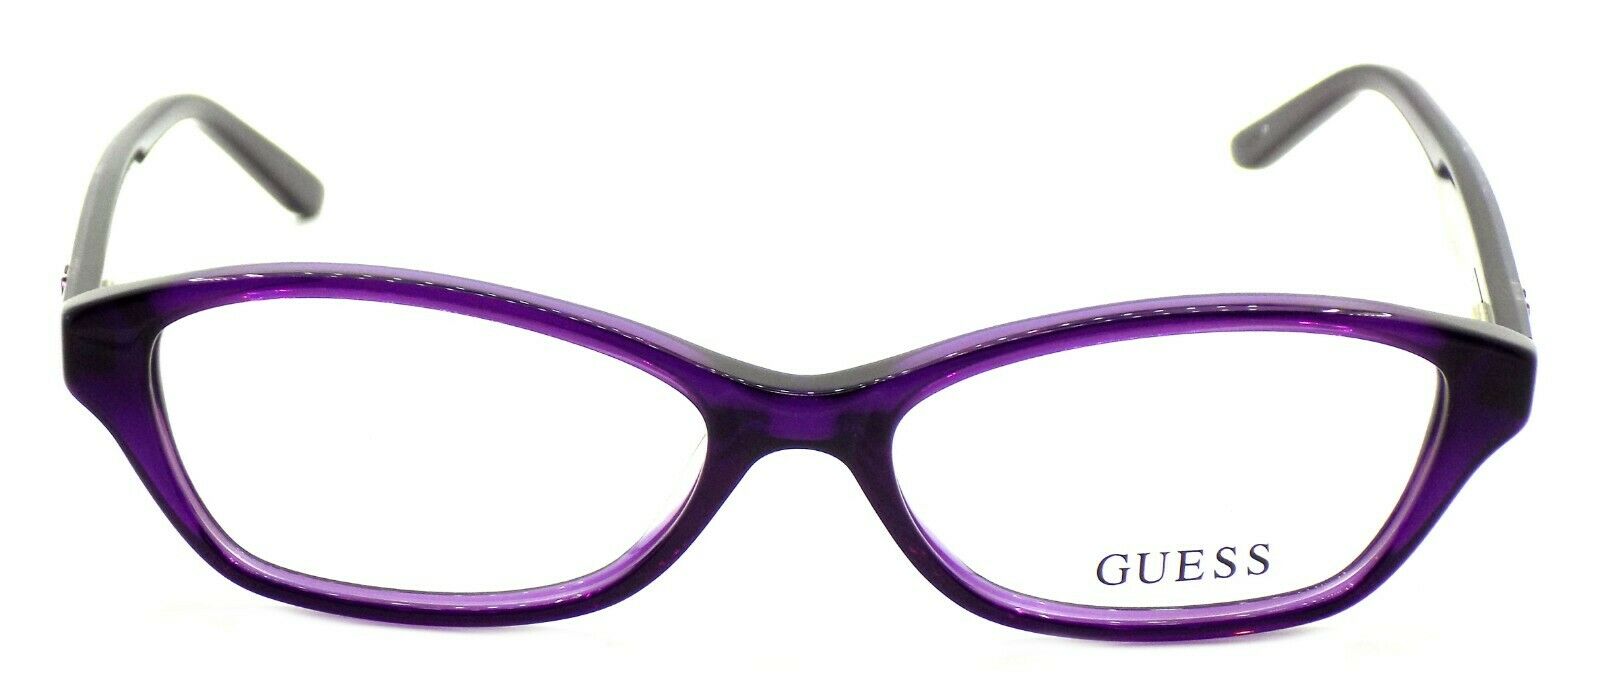 2-GUESS GU2417 PUR Women's Plastic Eyeglasses Frames 52-15-135 Purple + CASE-715583960282-IKSpecs